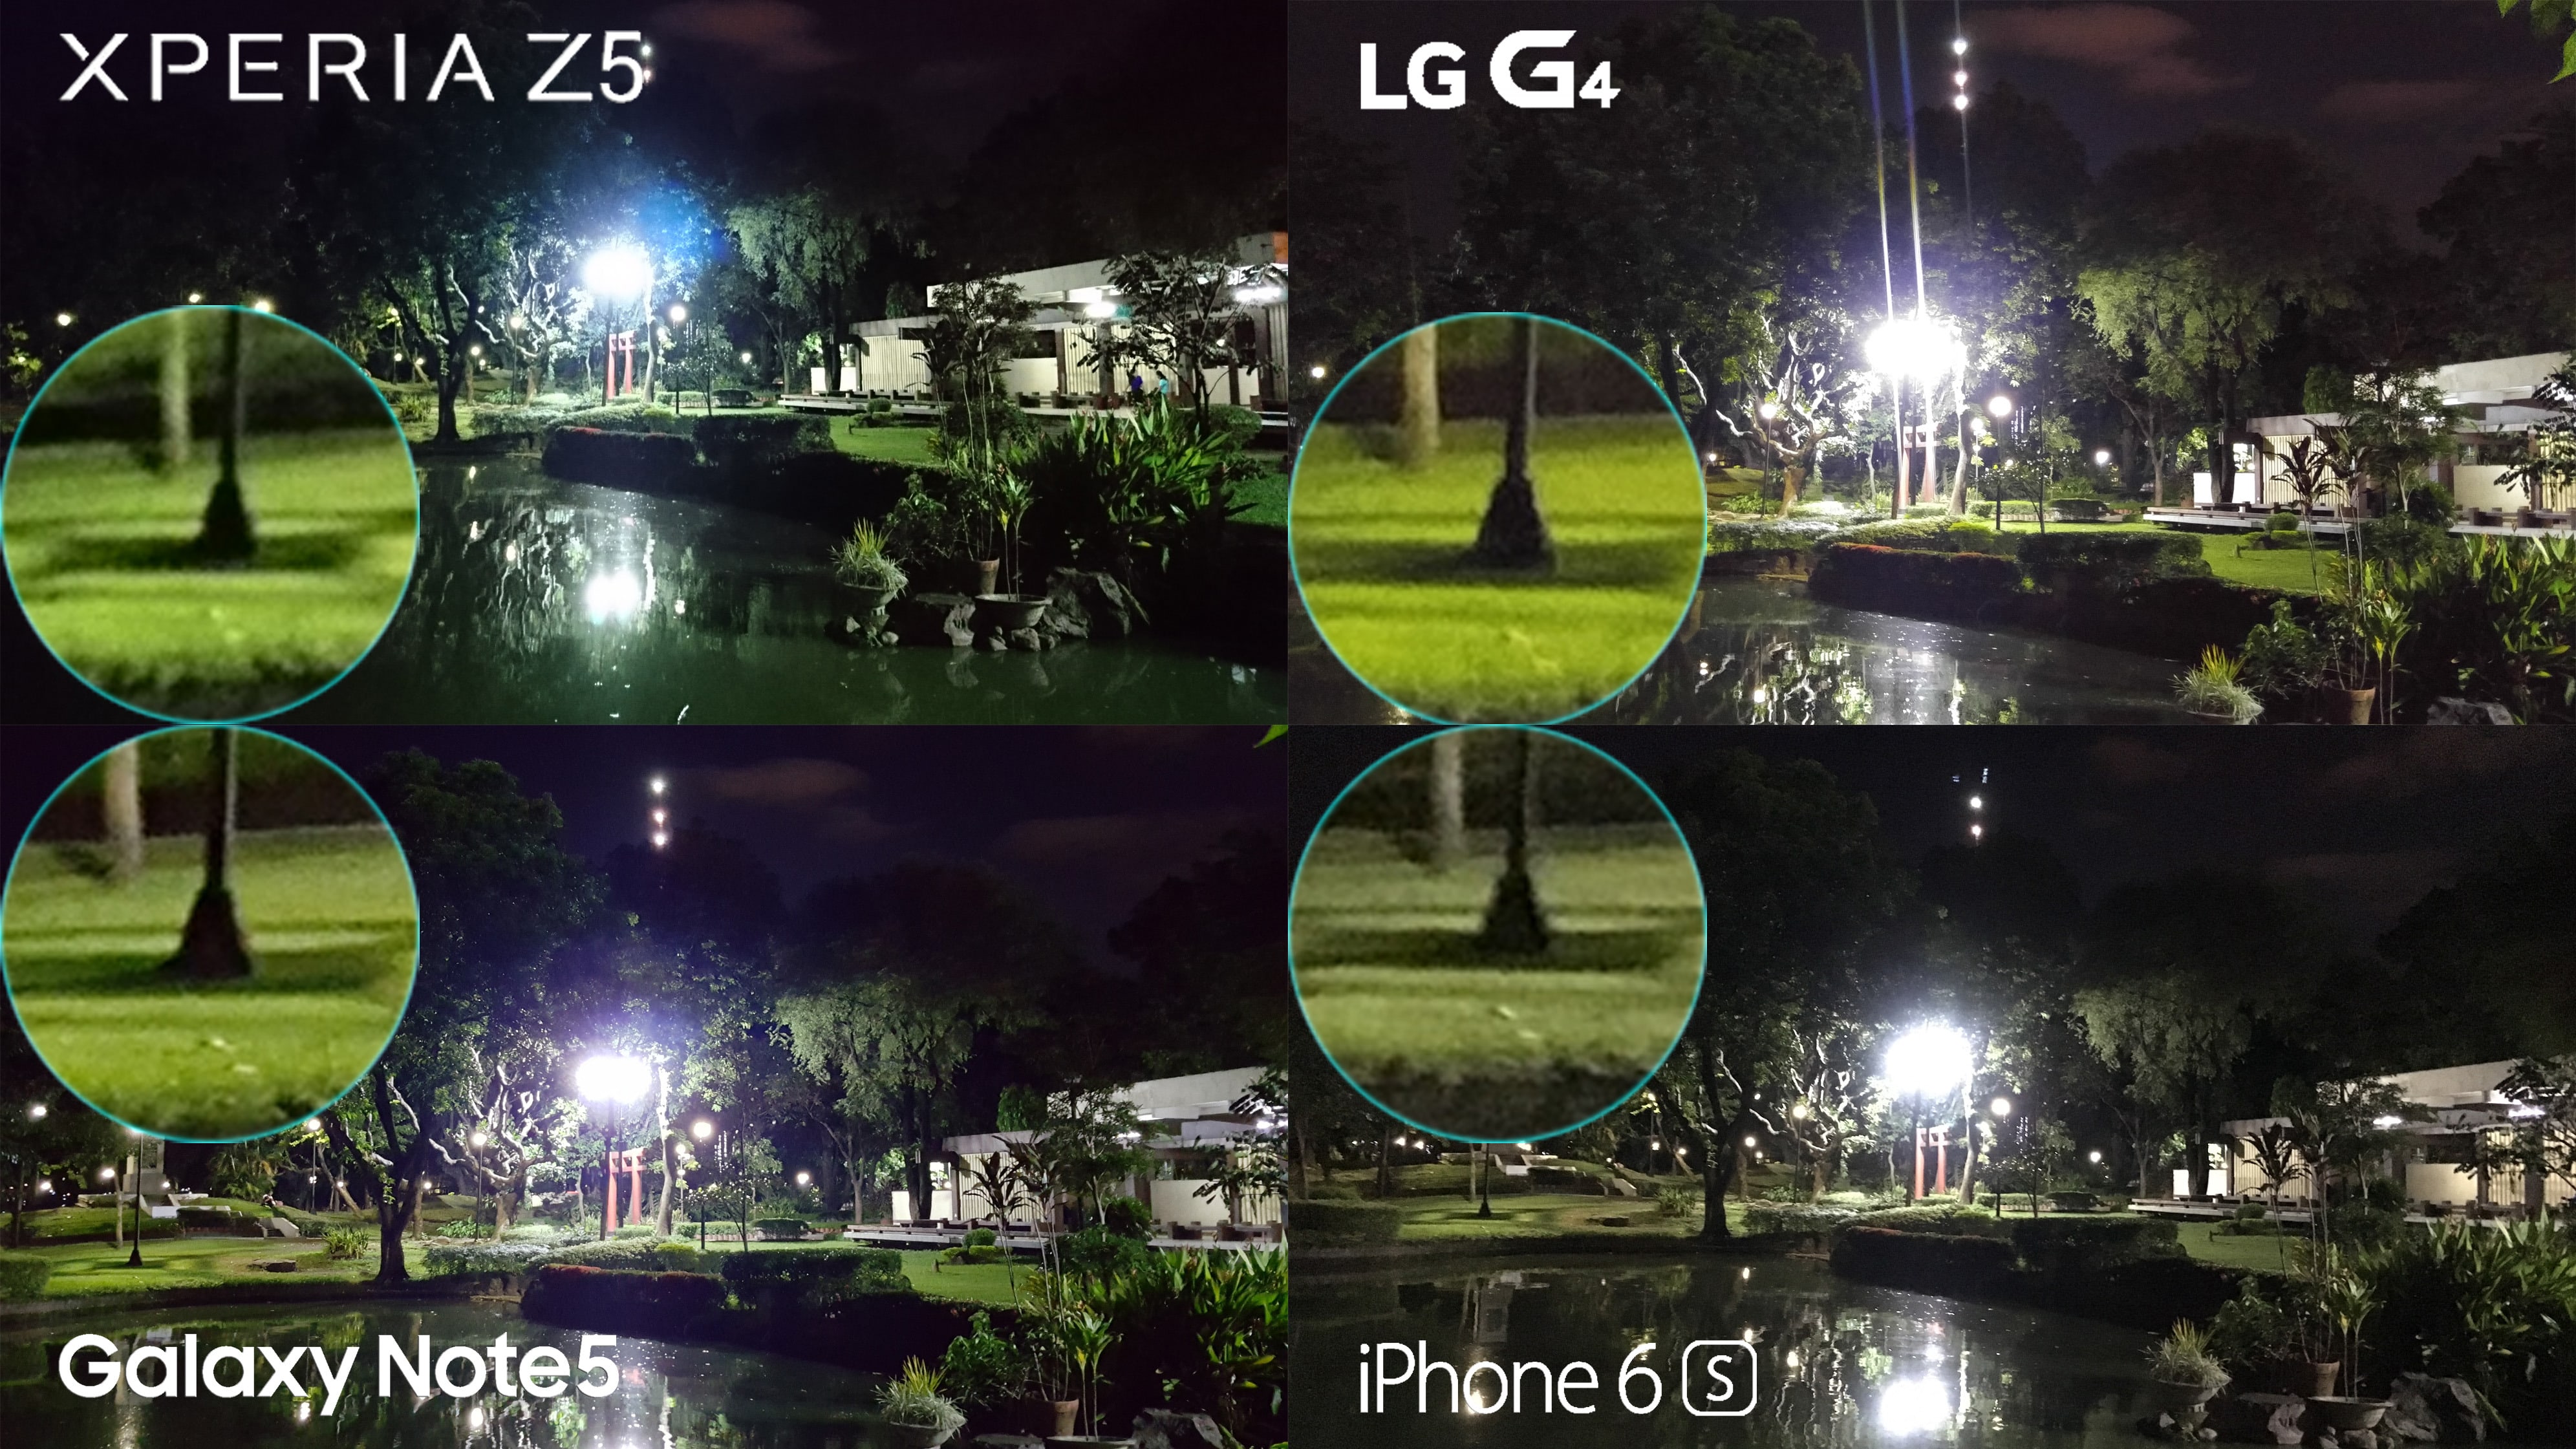 xperia-z5-lg-g4-iphone-6s-galaxy-note-5-camera-review-comparison14-min